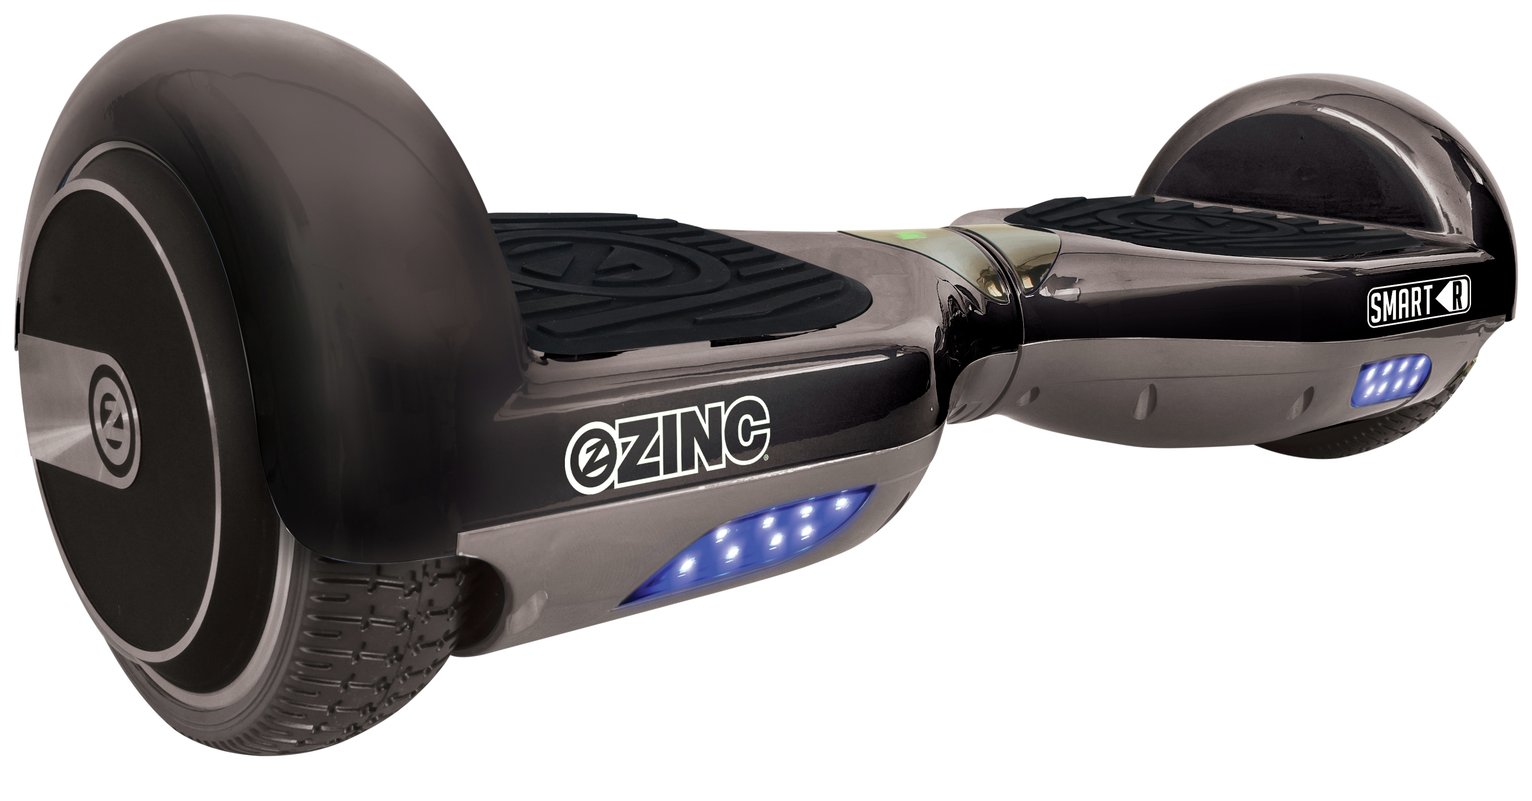 Zinc Smart R Hoverboard